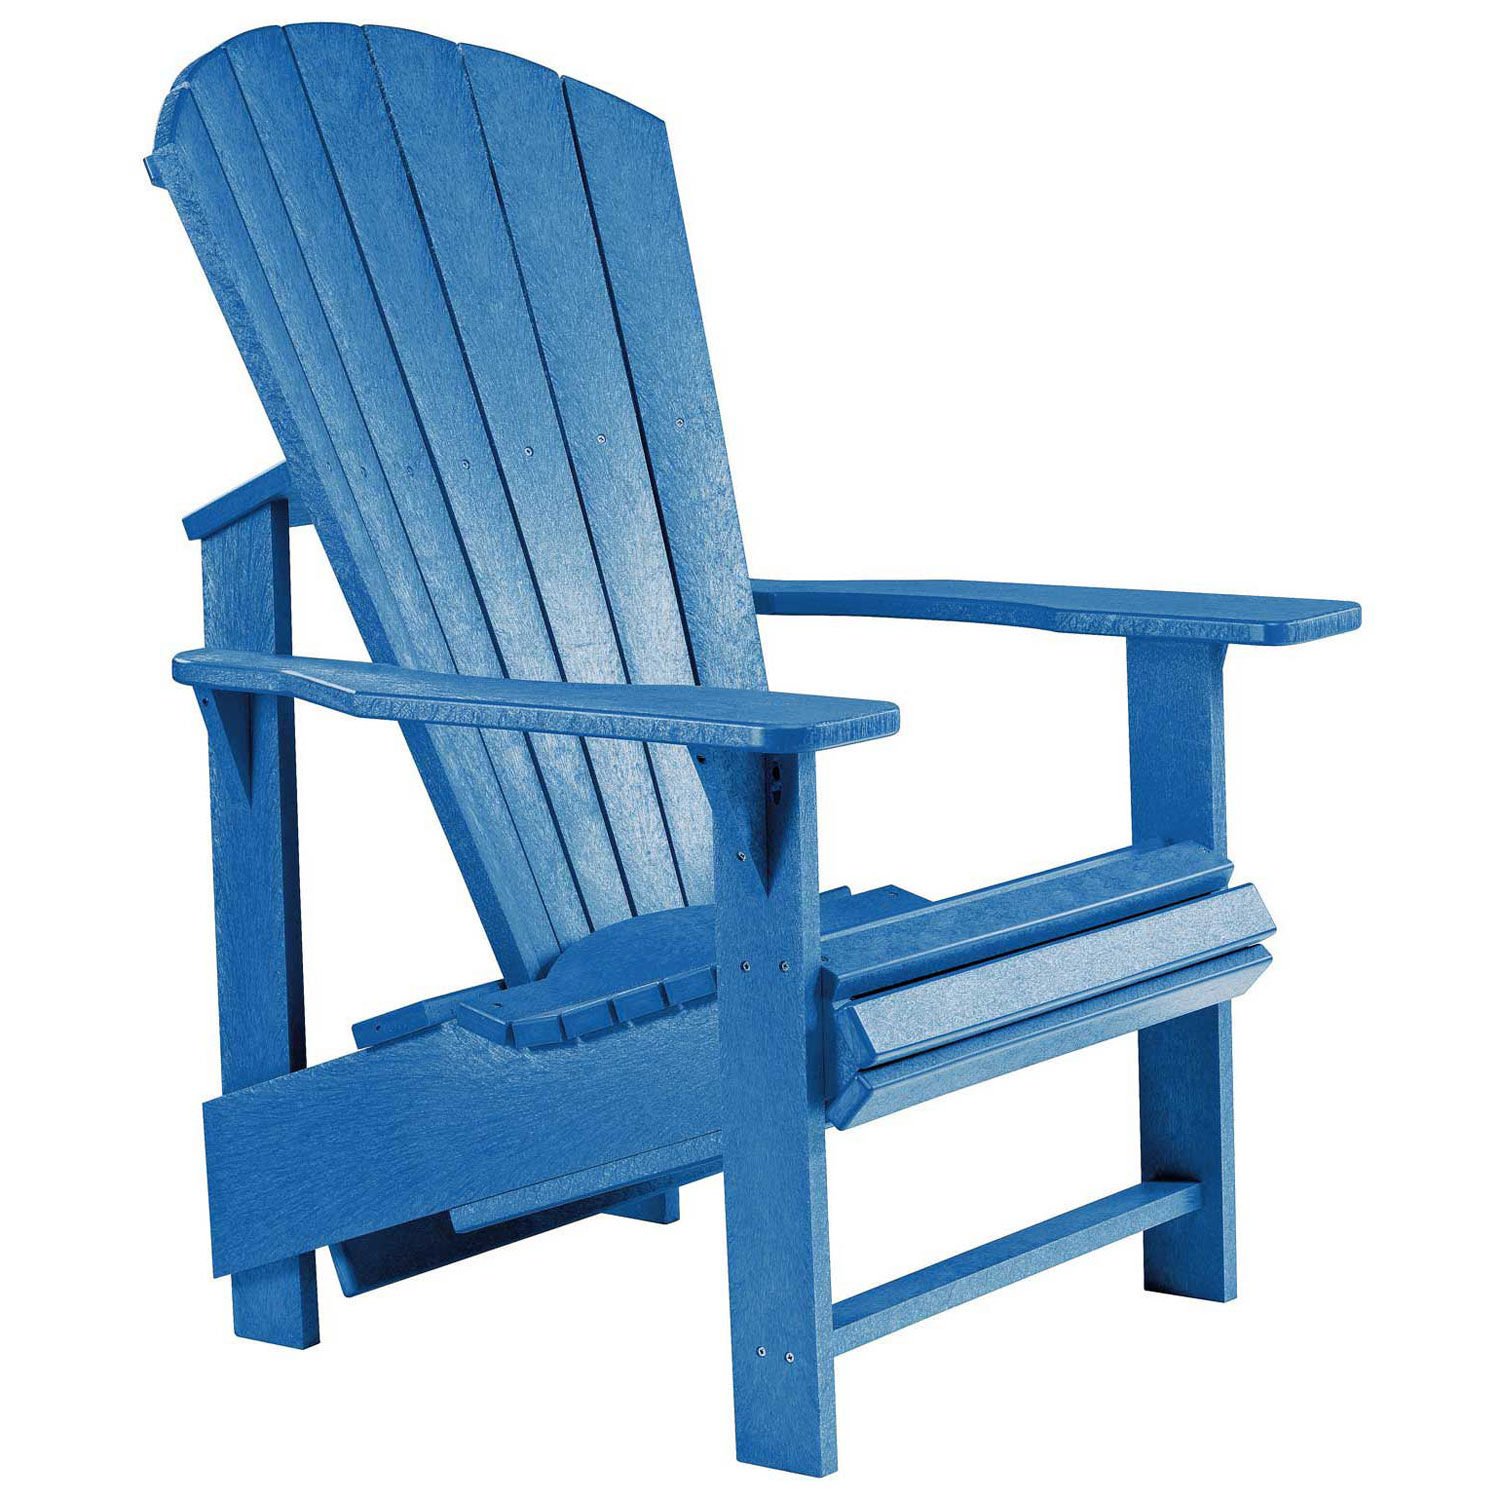 Recycled Plastic Upright Adirondack Chair, Blue, 27"L x 31"W x 44"H | eBay